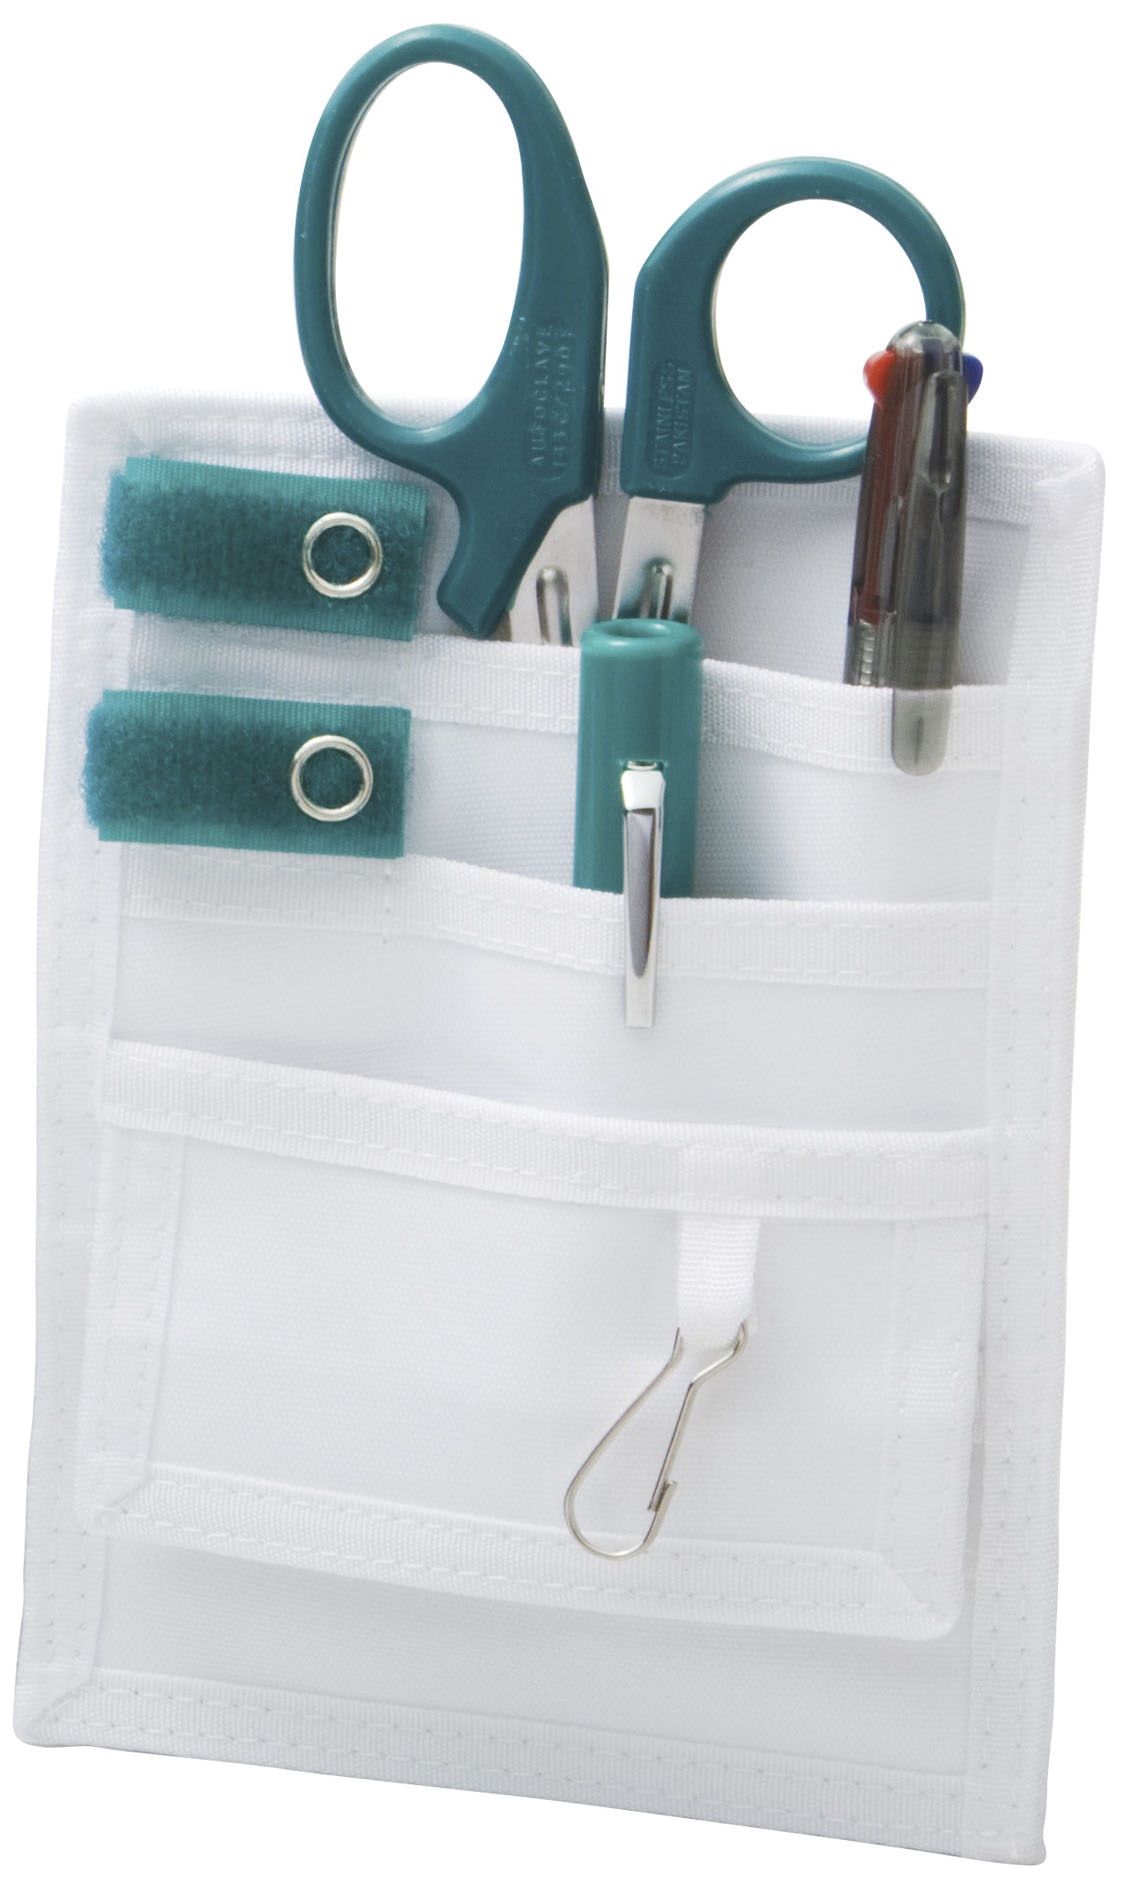 Pocket Pal Organizer and Instrument Kit